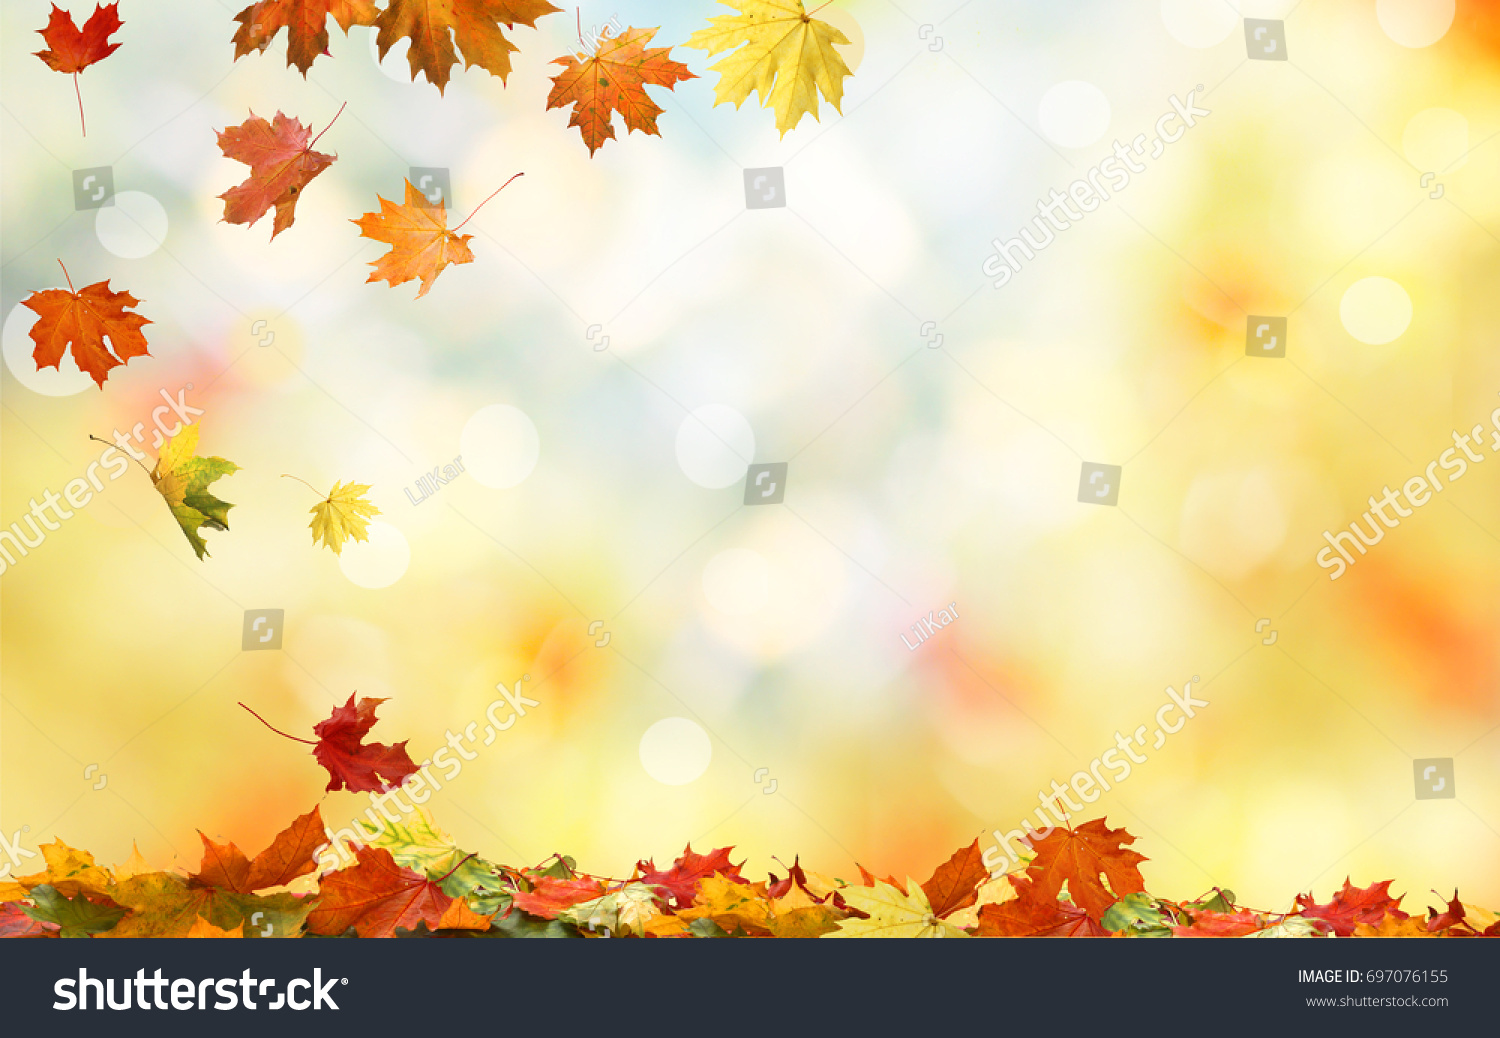 5-490-437-autumn-season-background-images-stock-photos-vectors